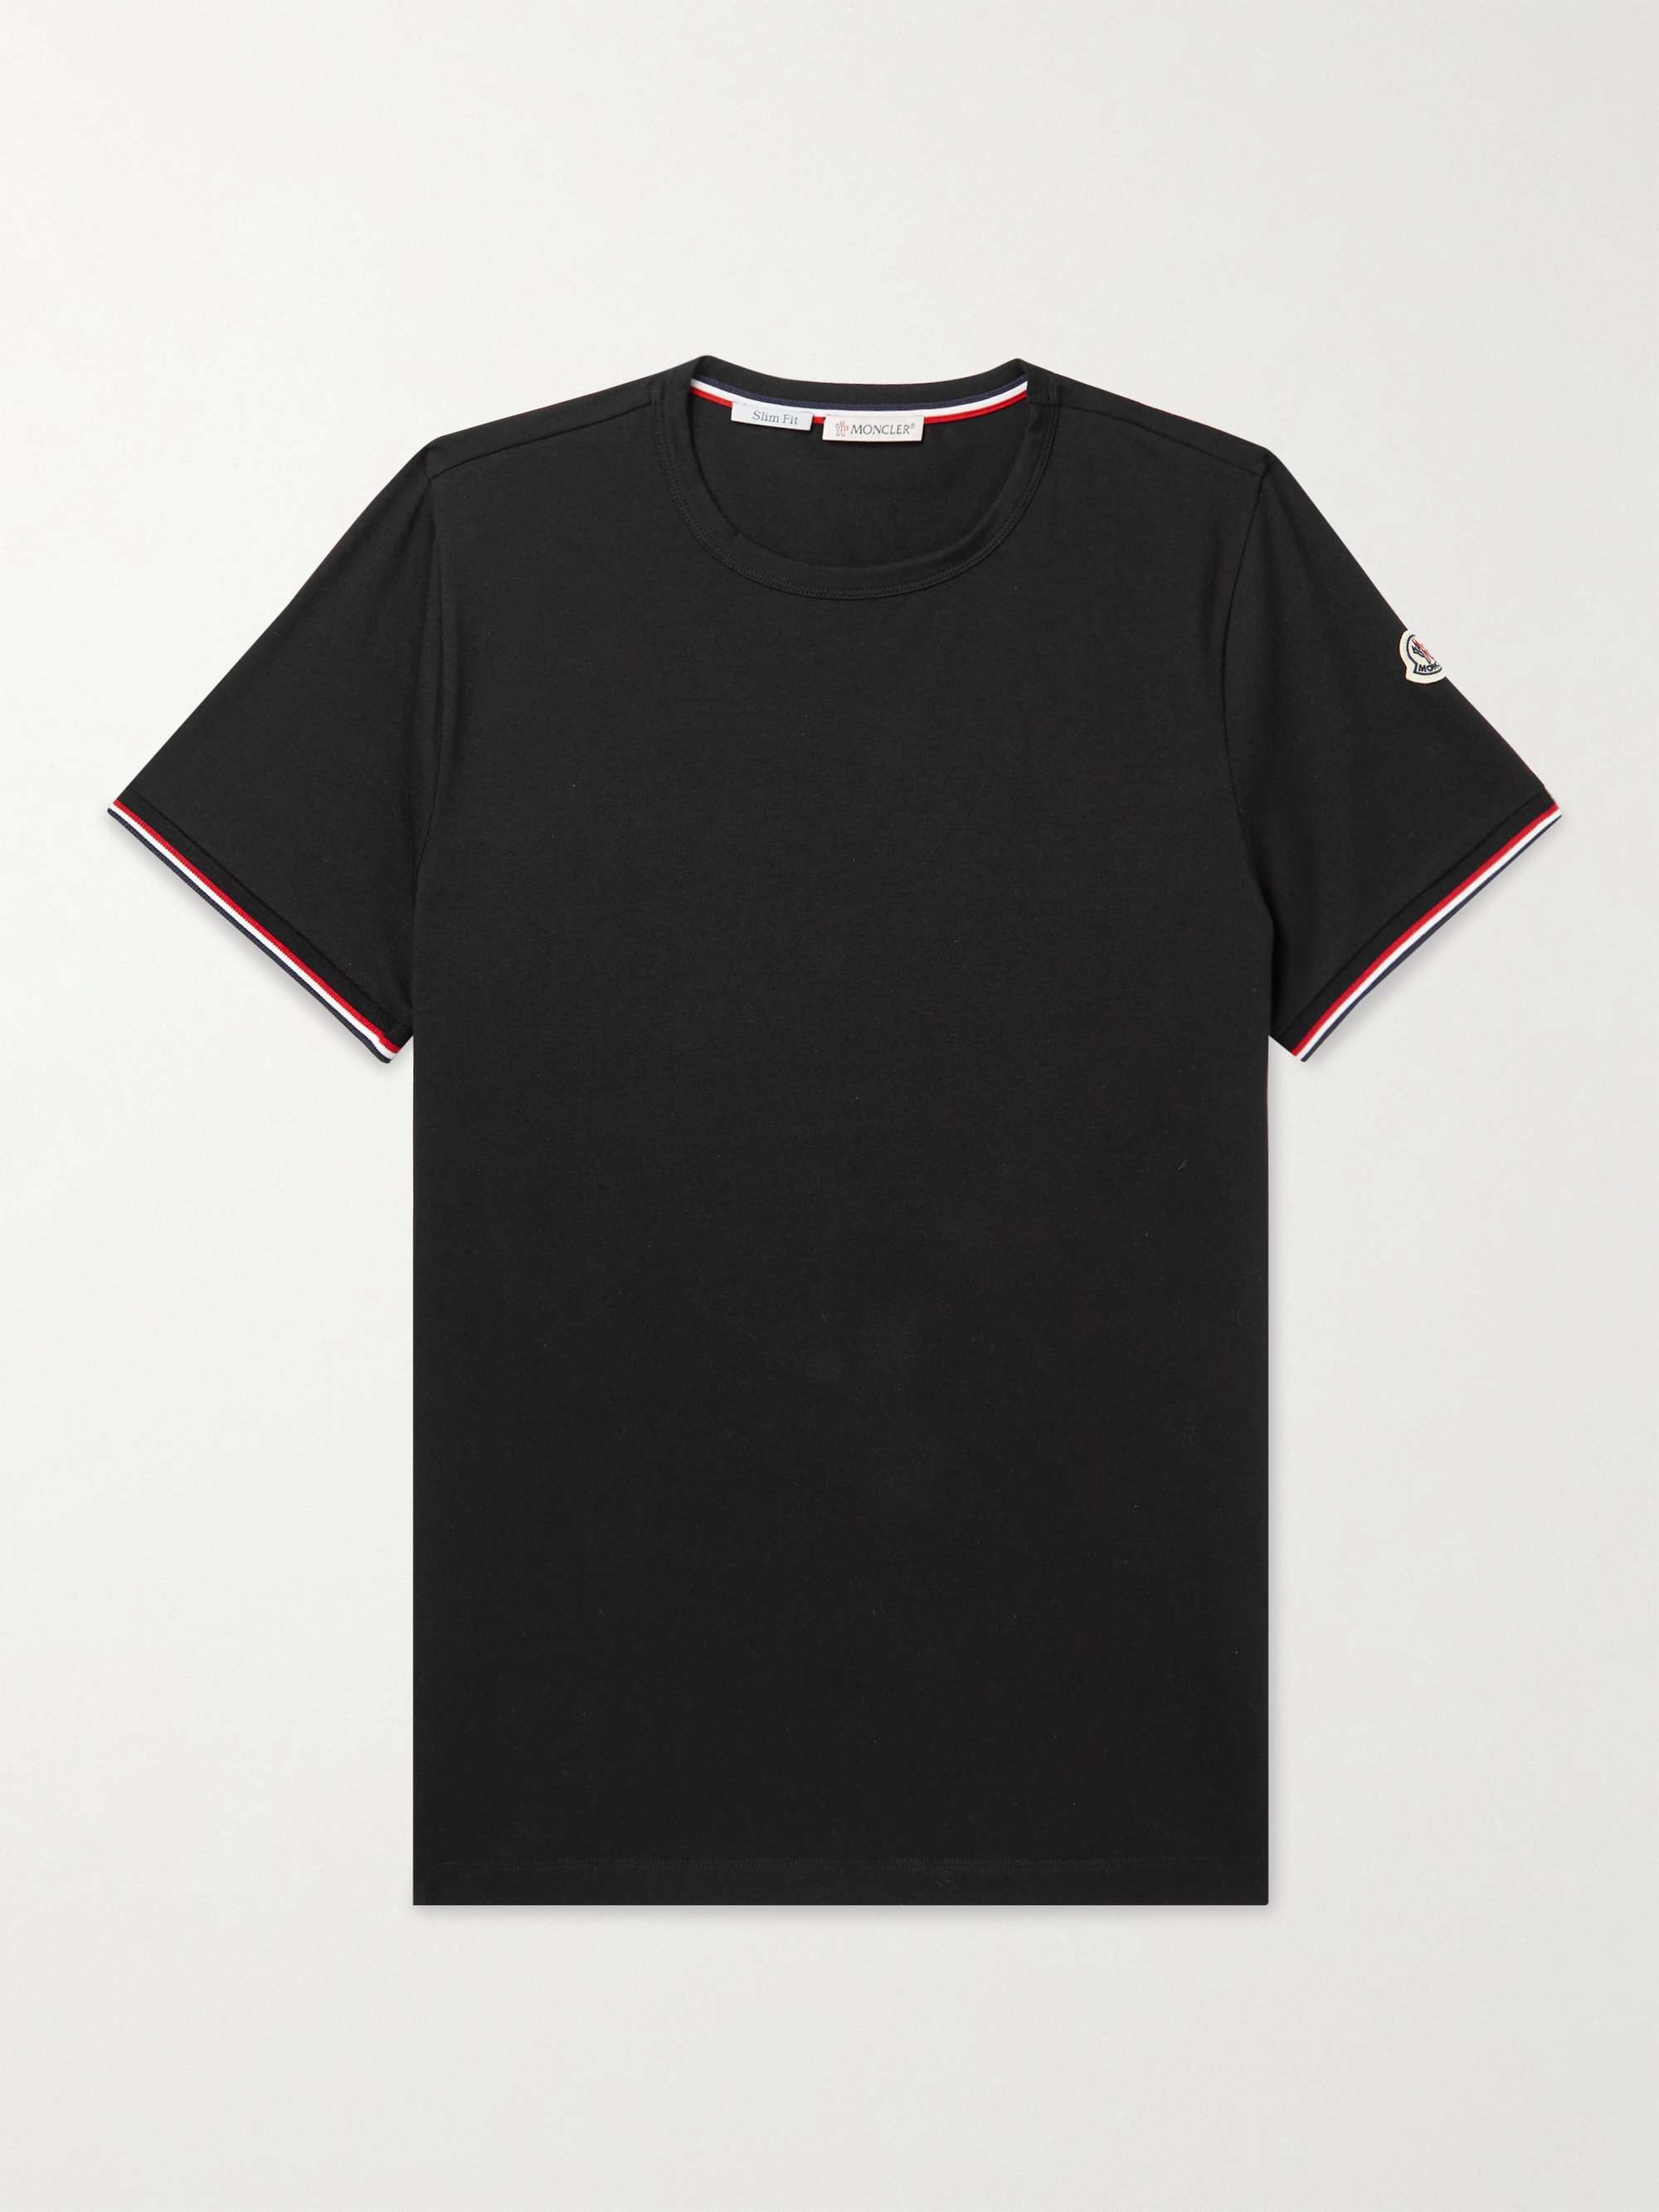 MONCLER Slim-Fit Logo-Appliquéd Contrast-Tipped Cotton-Blend Jersey T-Shirt  | MR PORTER